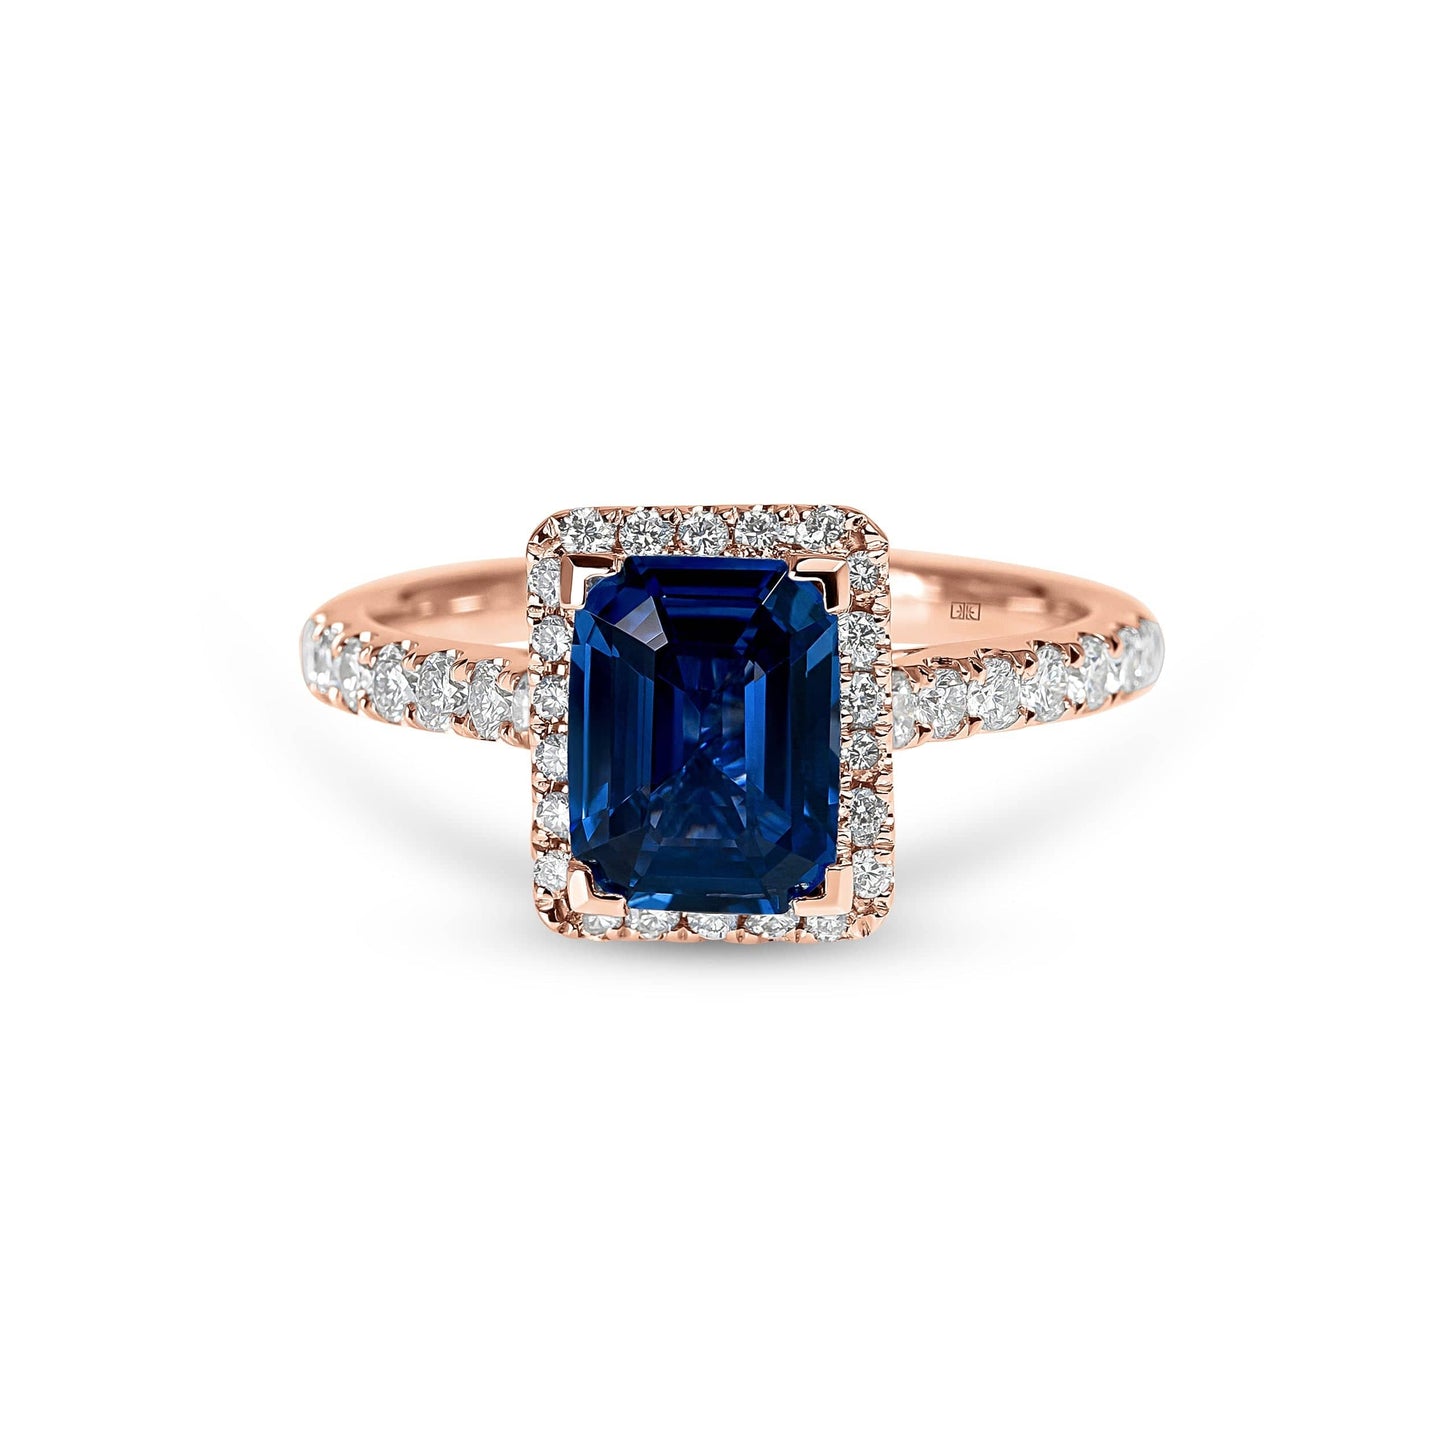 Emerald Cut Sapphire with Sidestones & Halo Diamond Ring